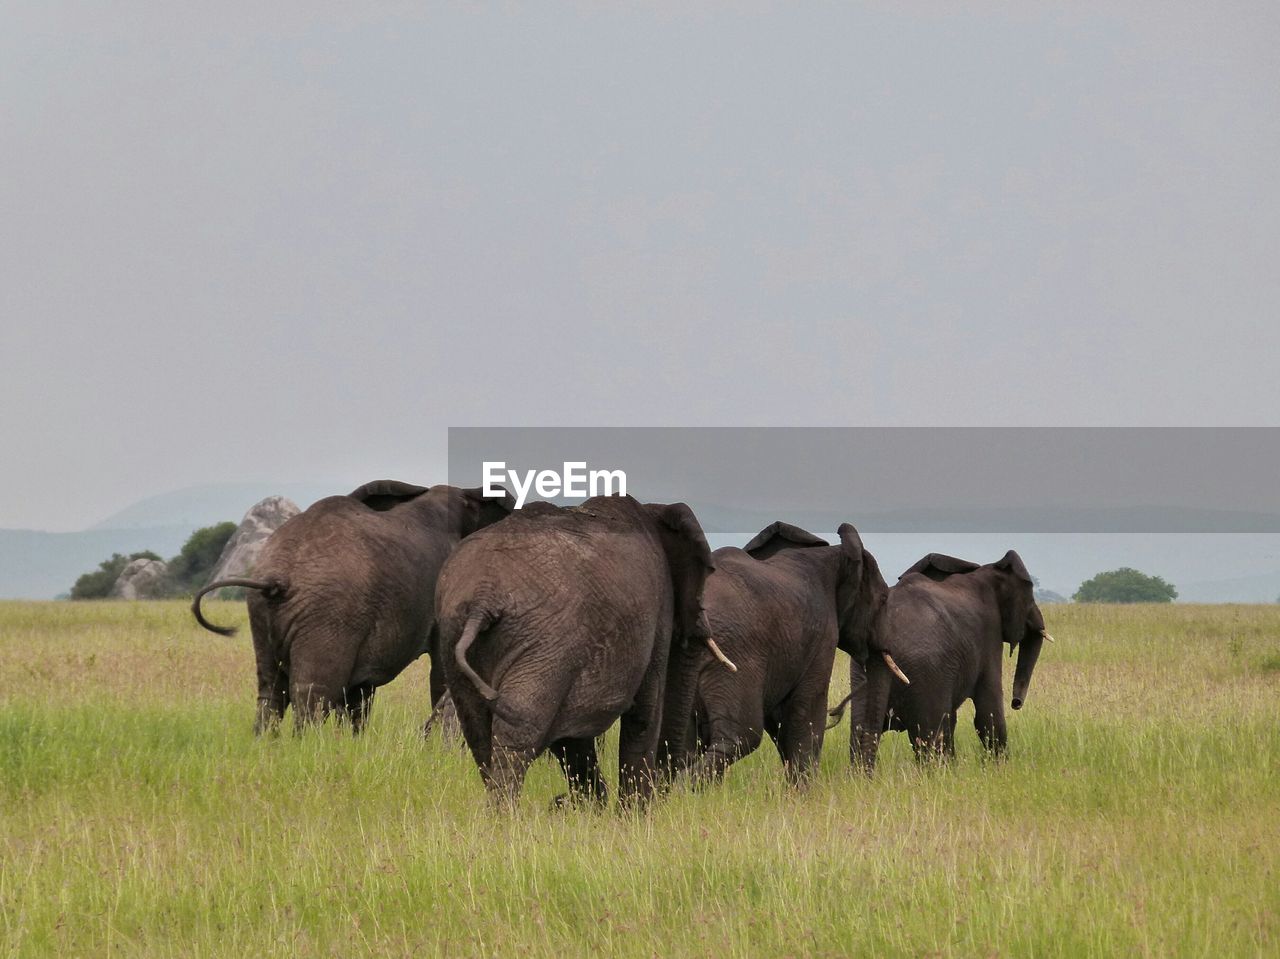 Elephants on field against clear sky